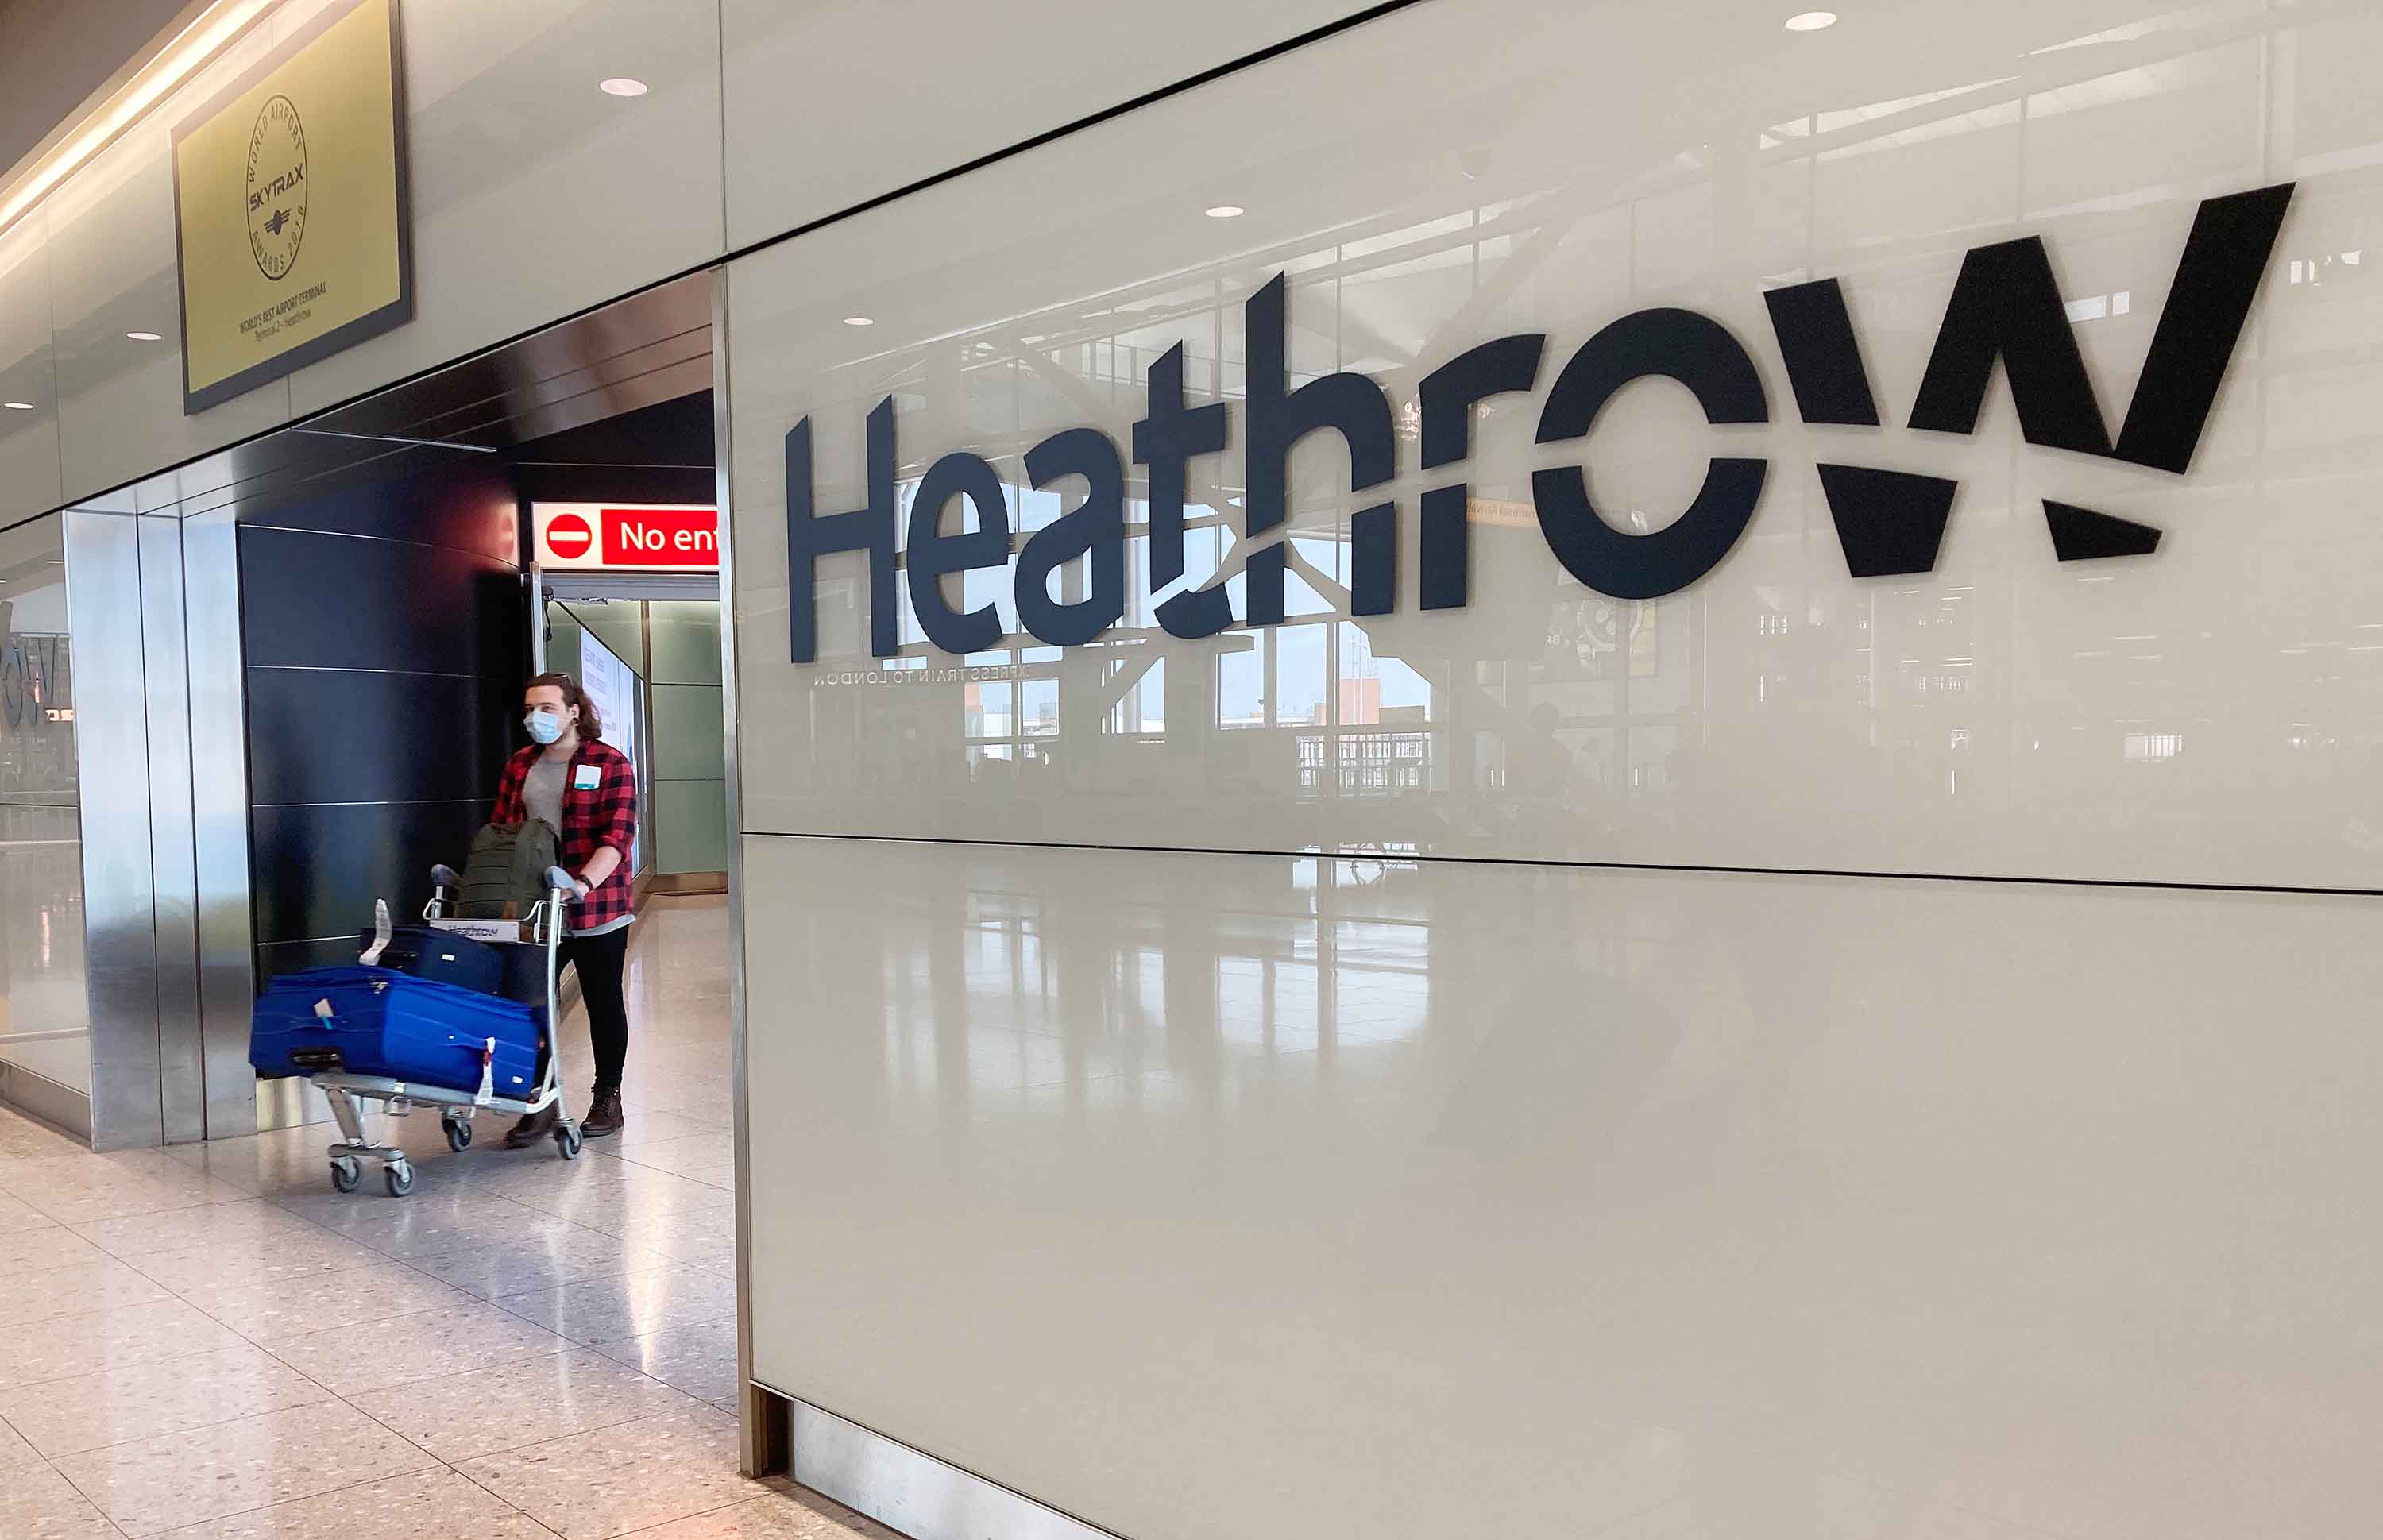 Heathrow airport in London